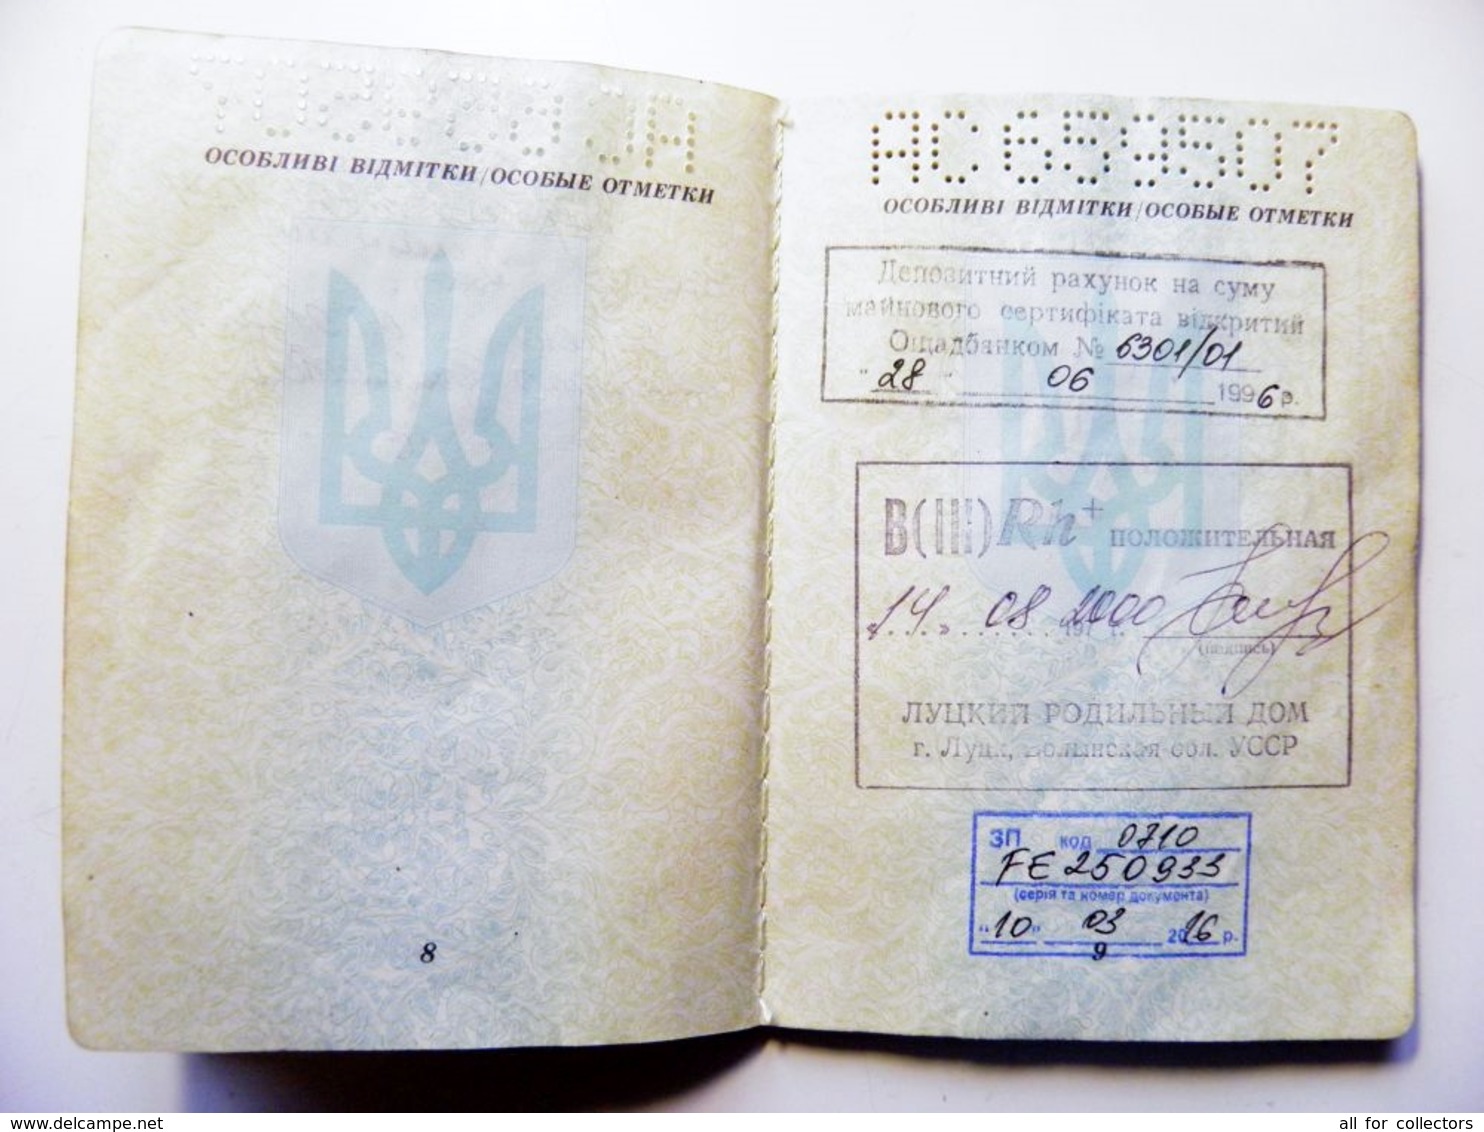 passport Ukraine 2000